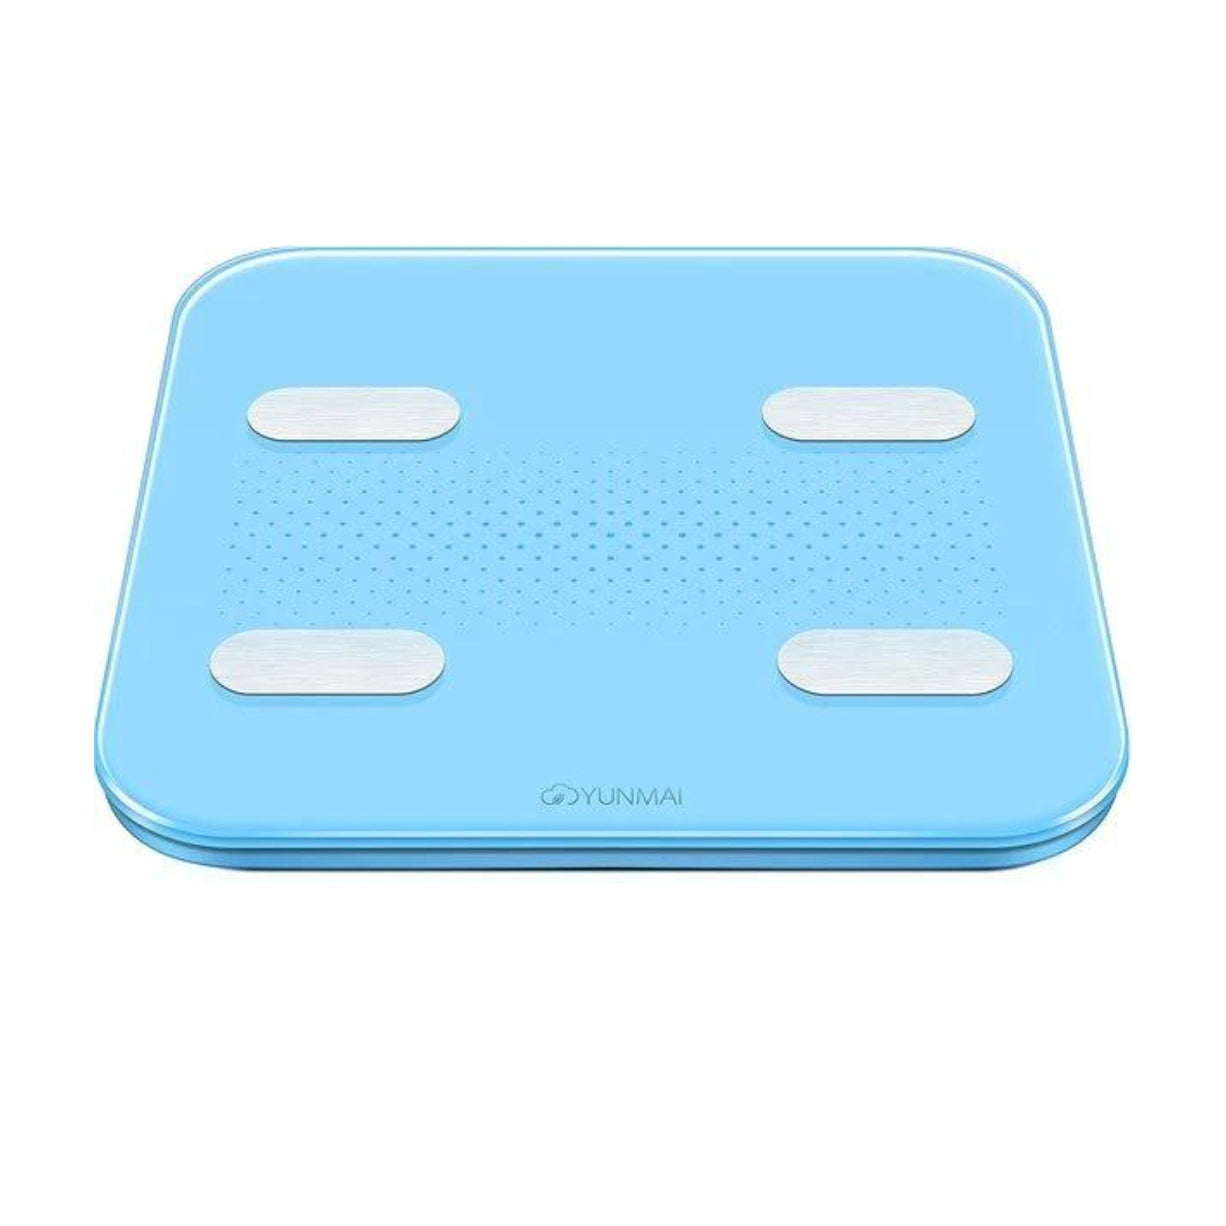 Yunmai Mini Bluetooth Smart Scale - Blue